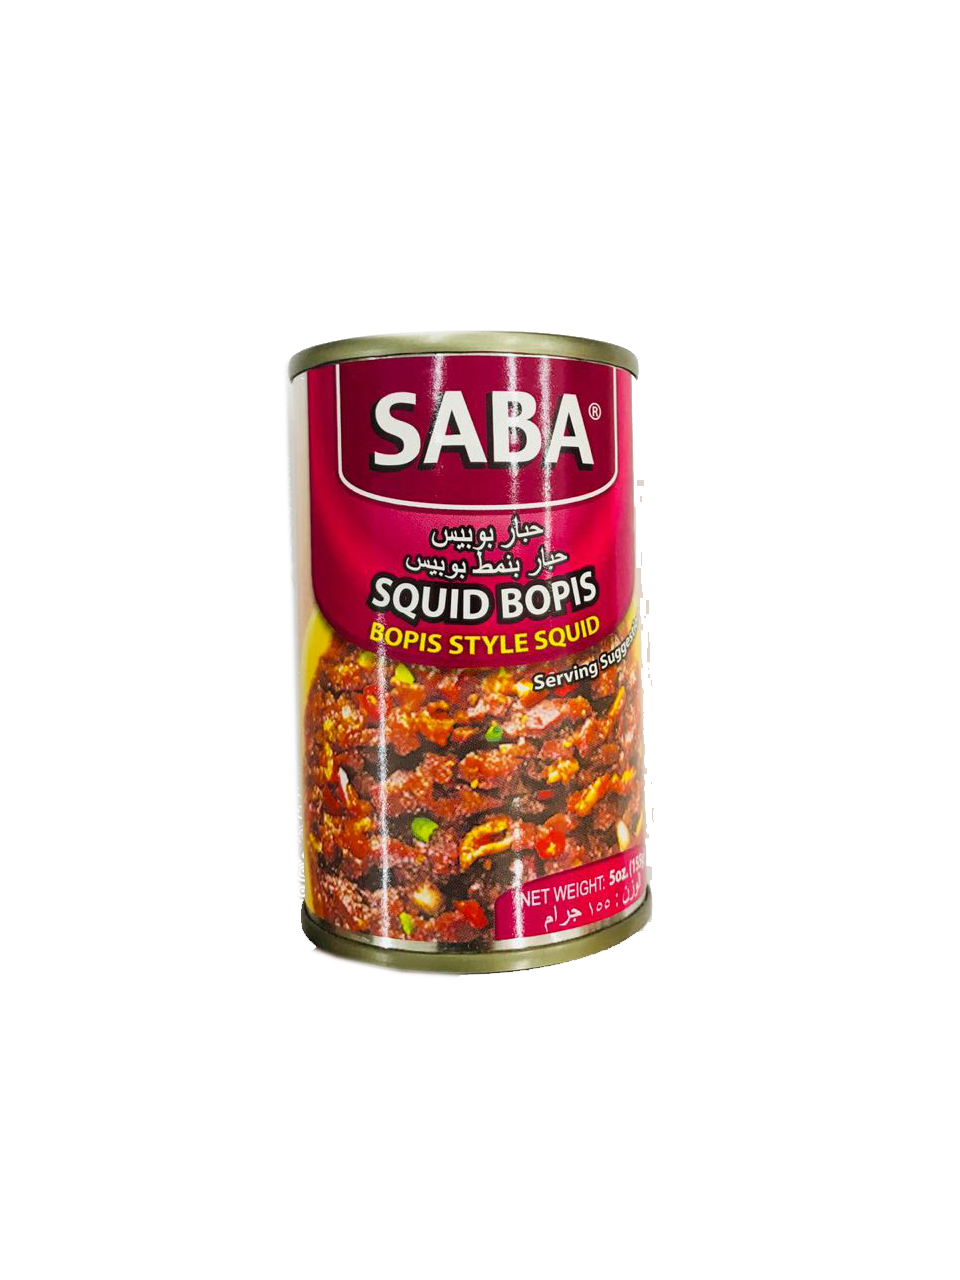 Saba Squid Bopis 155g